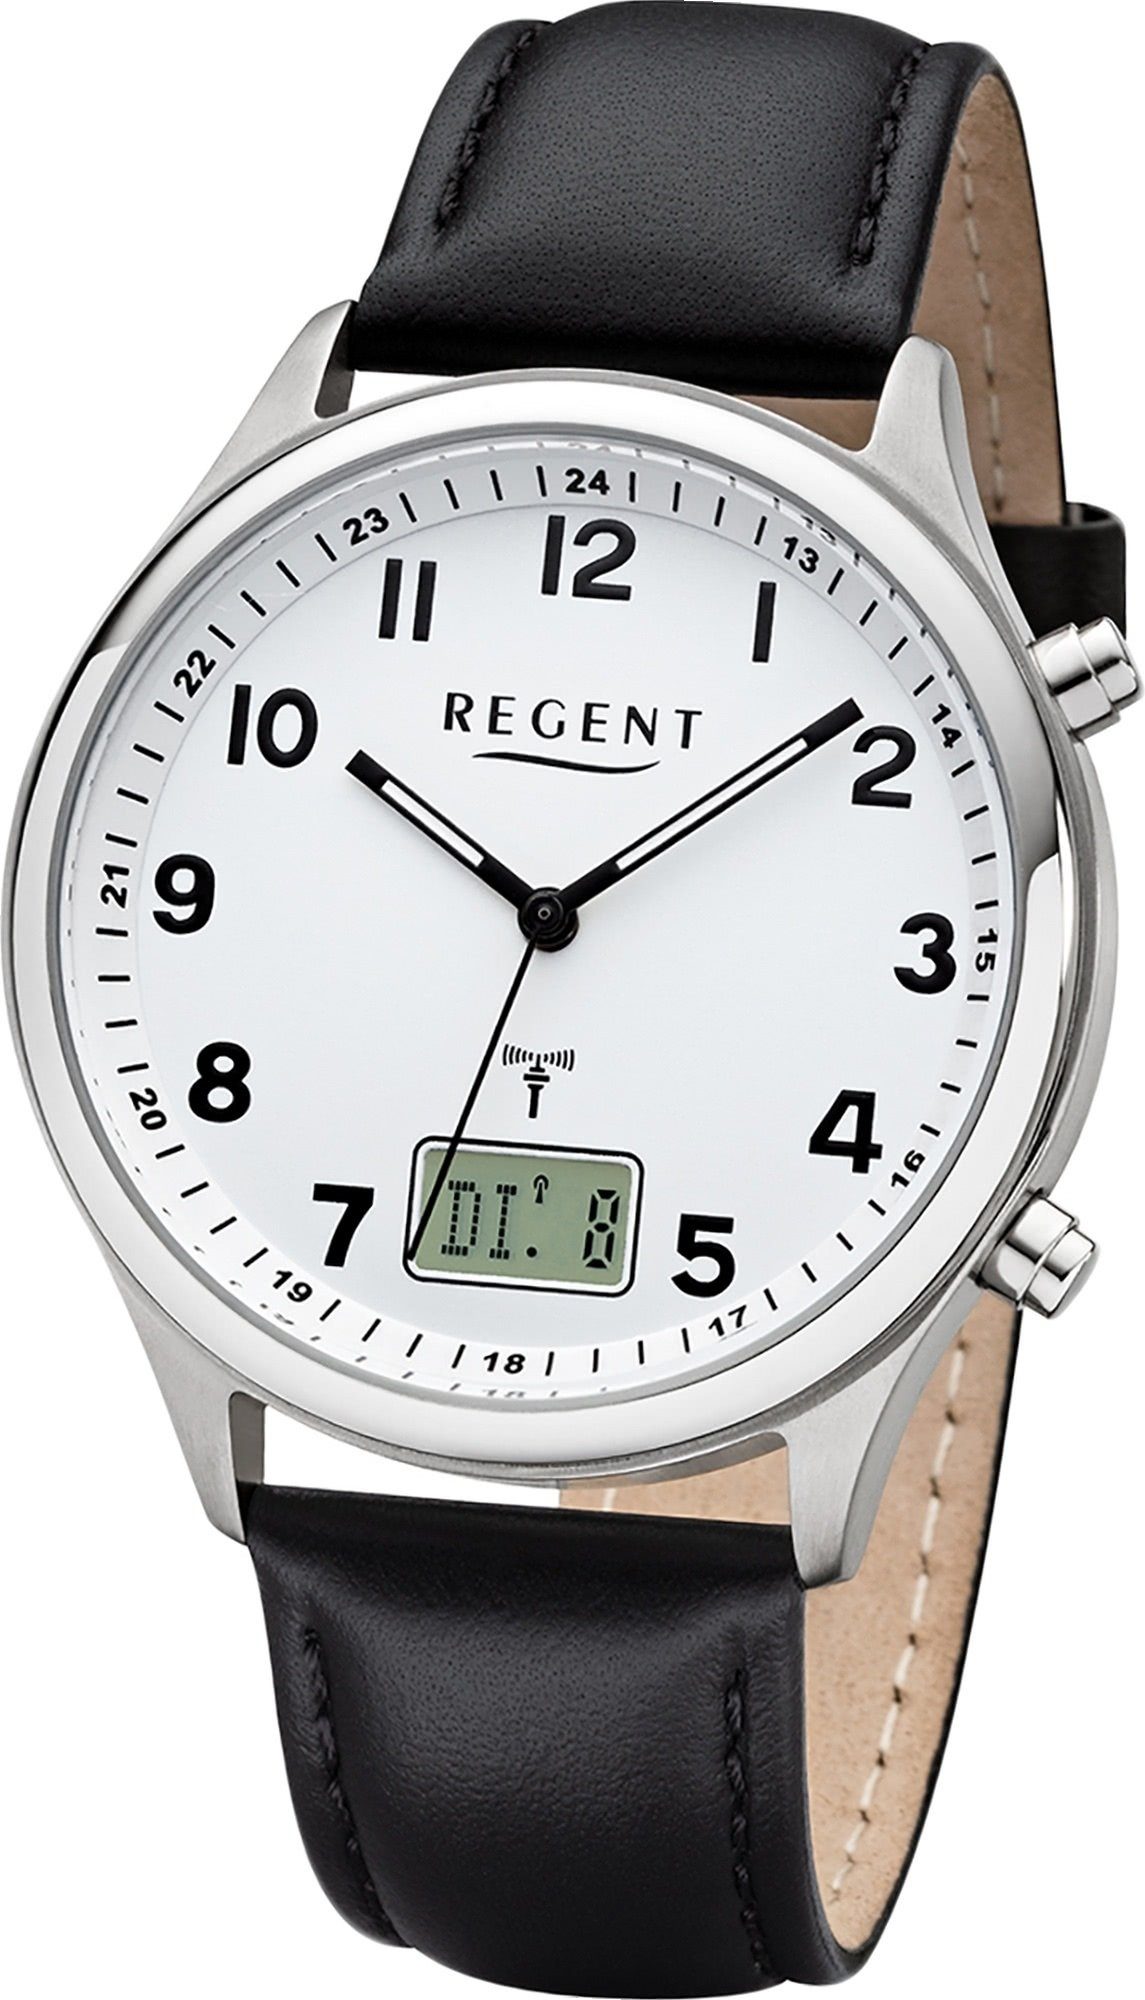 Regent Funkuhr Regent Leder Herrenuhr Gehäuse, Lederarmband Herren (ca. BA-446, groß schwarz, rundes 40mm) Uhr